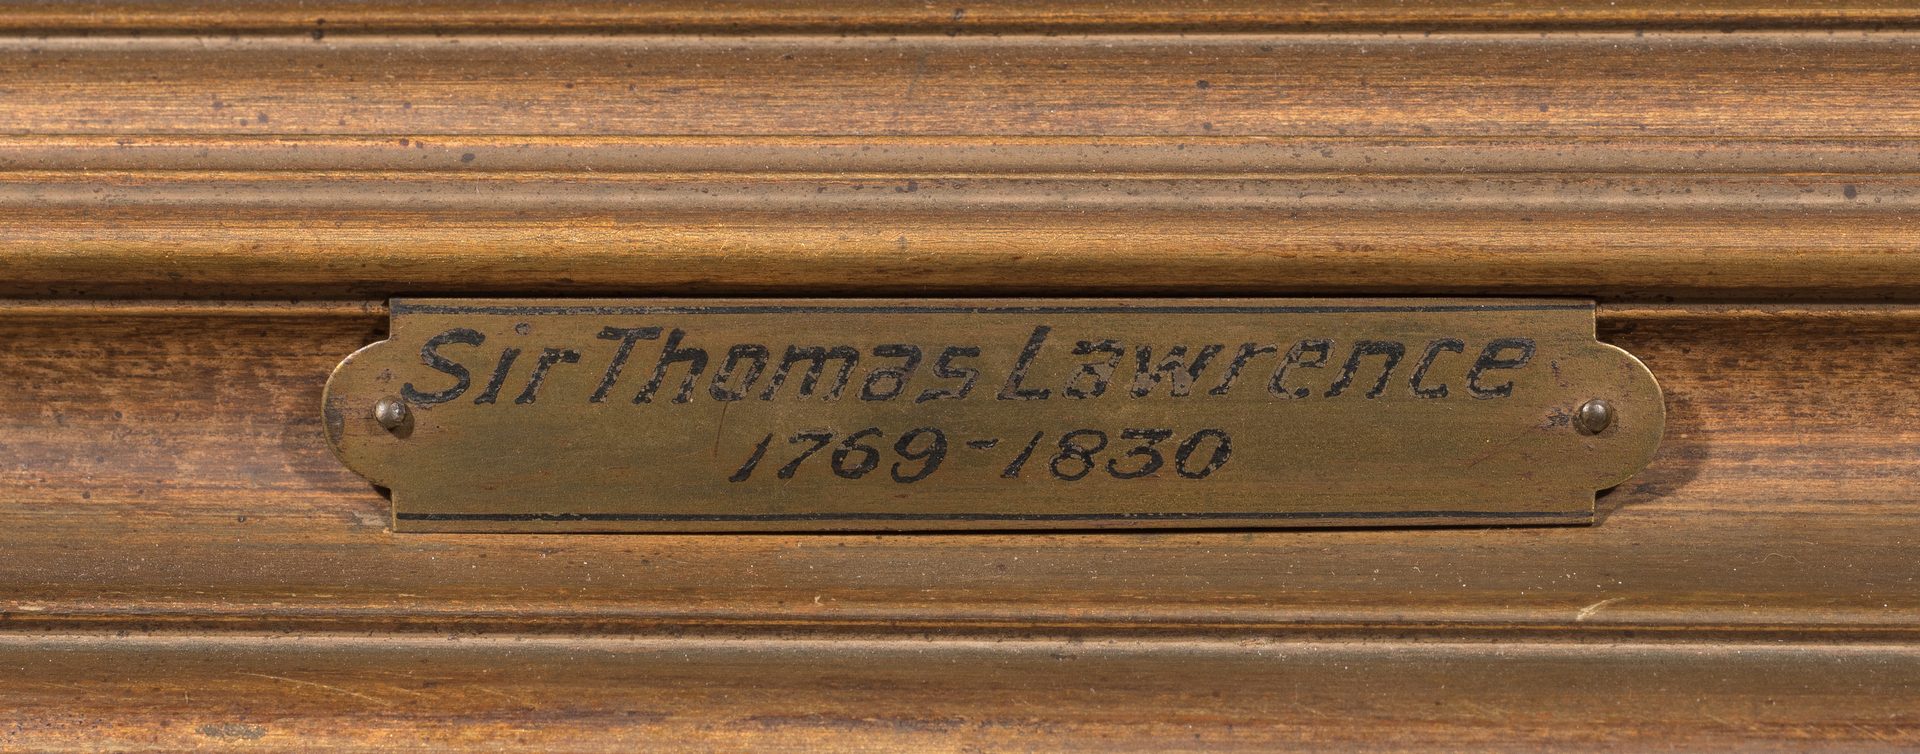 Lot 80: Portrait of a Lady, attr. Sir Thomas Lawrence